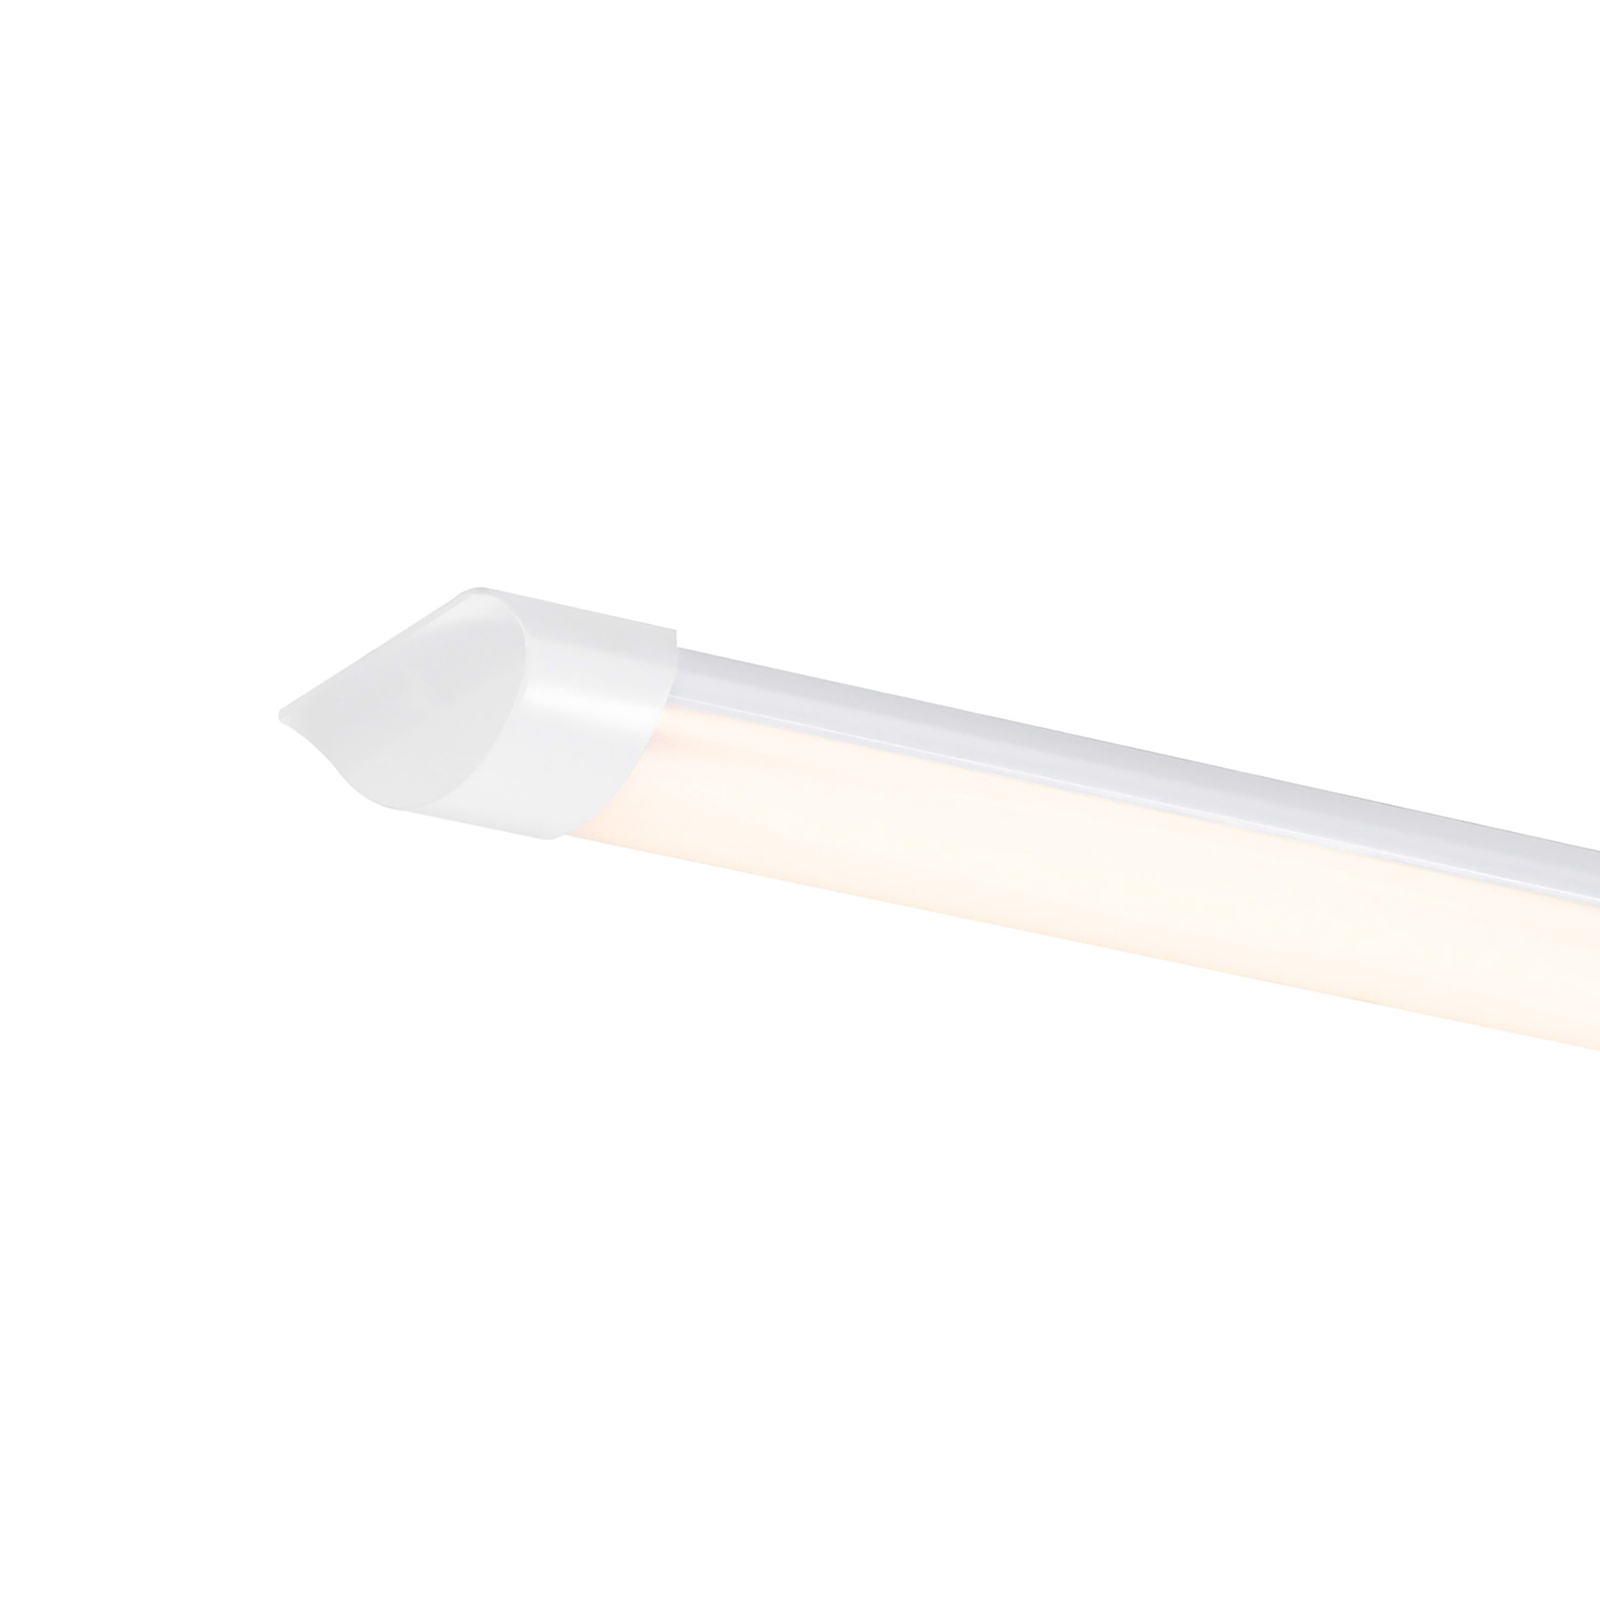 Réglette lumineuse LED Glendale, 119 cm, IP20, plastique, blanc